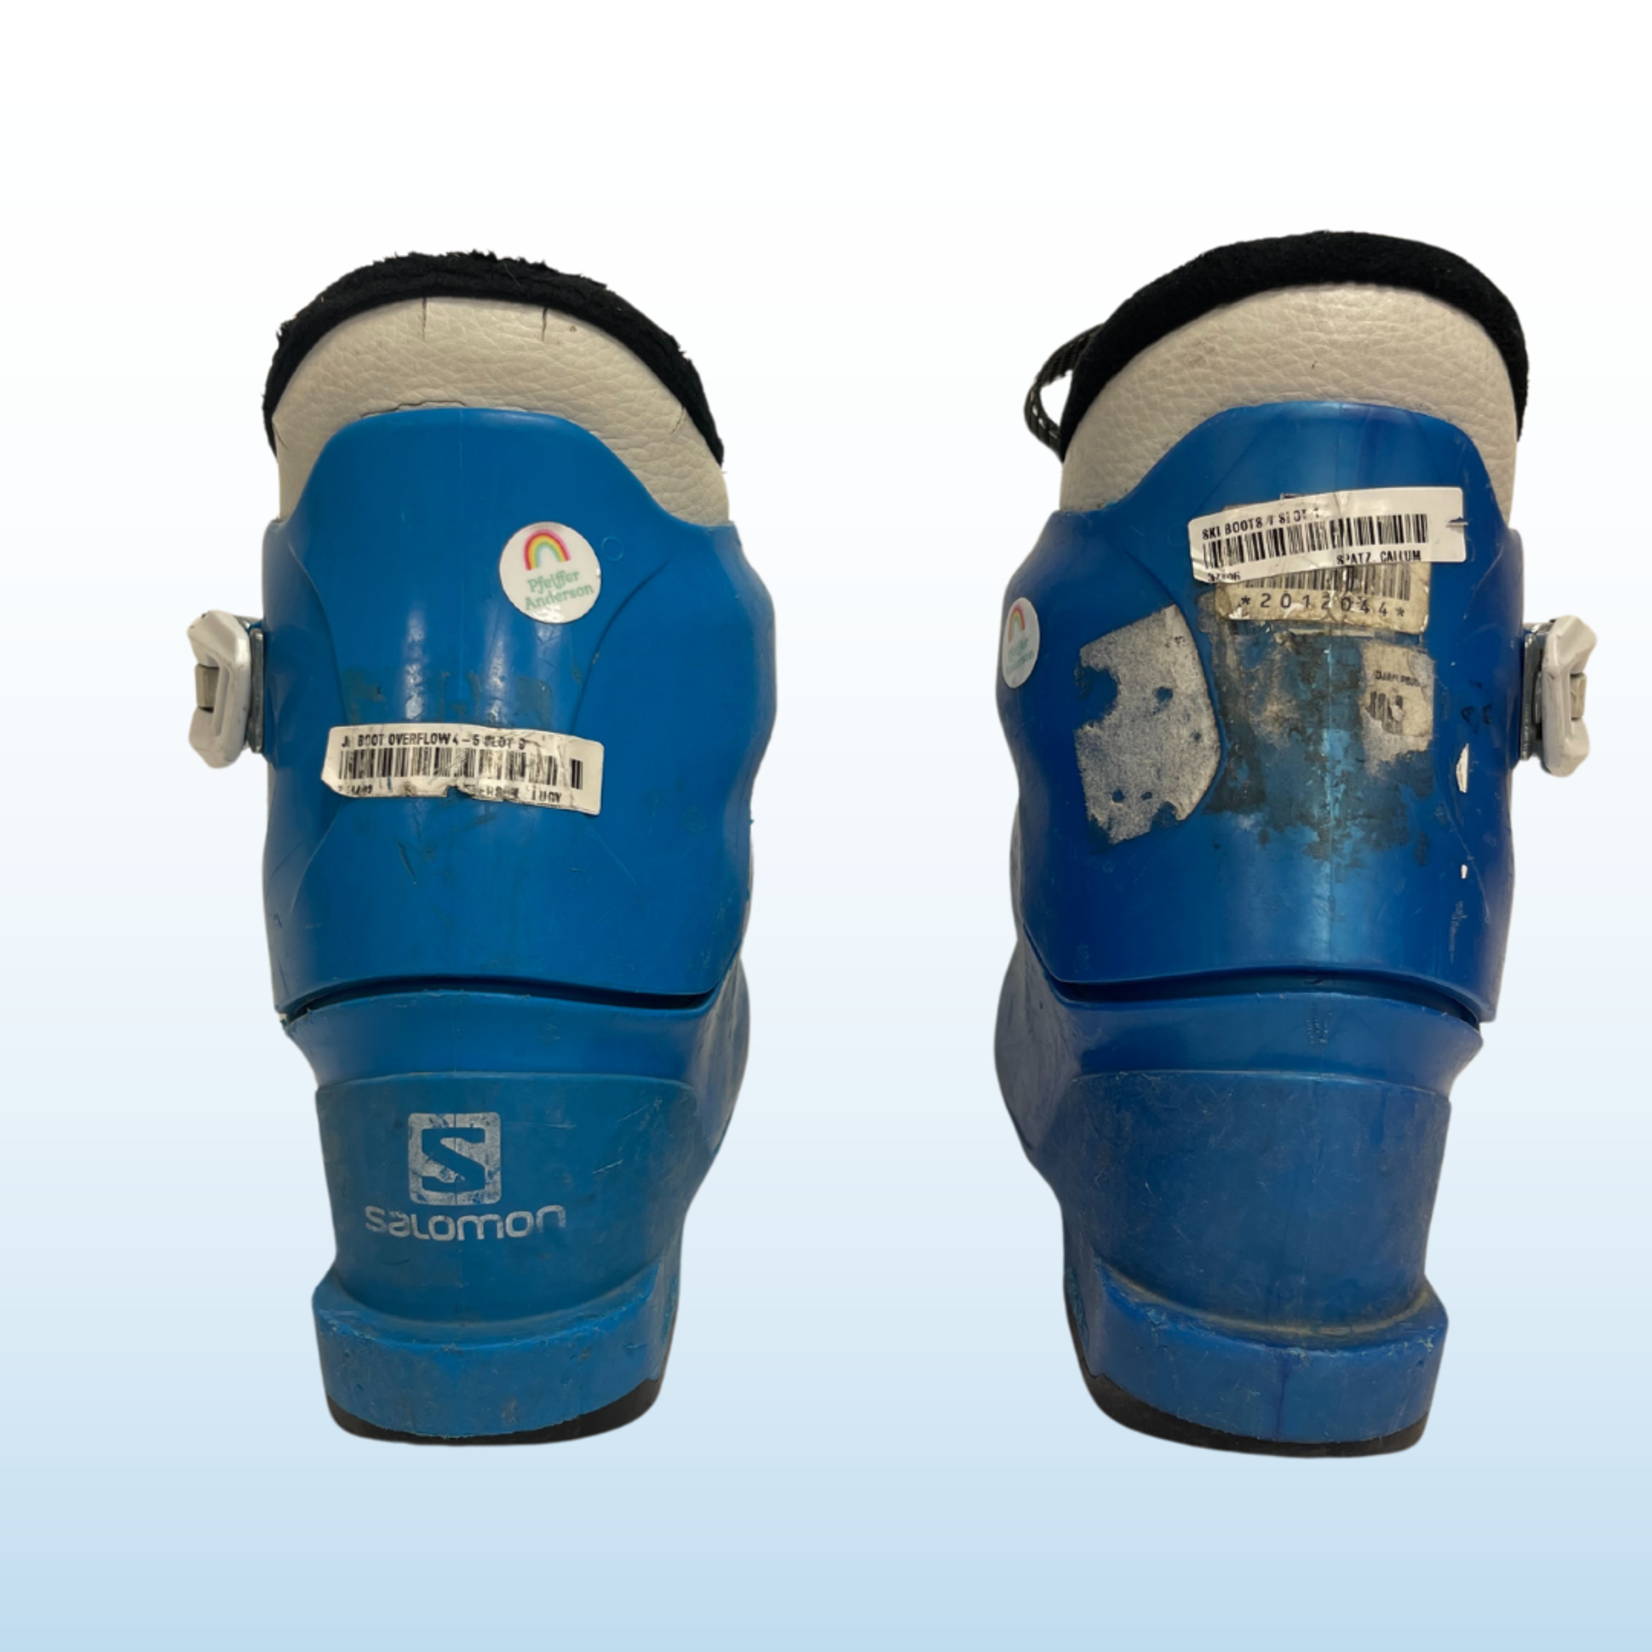 Salomon Salomon Kids Ski Boots, Size 17/18